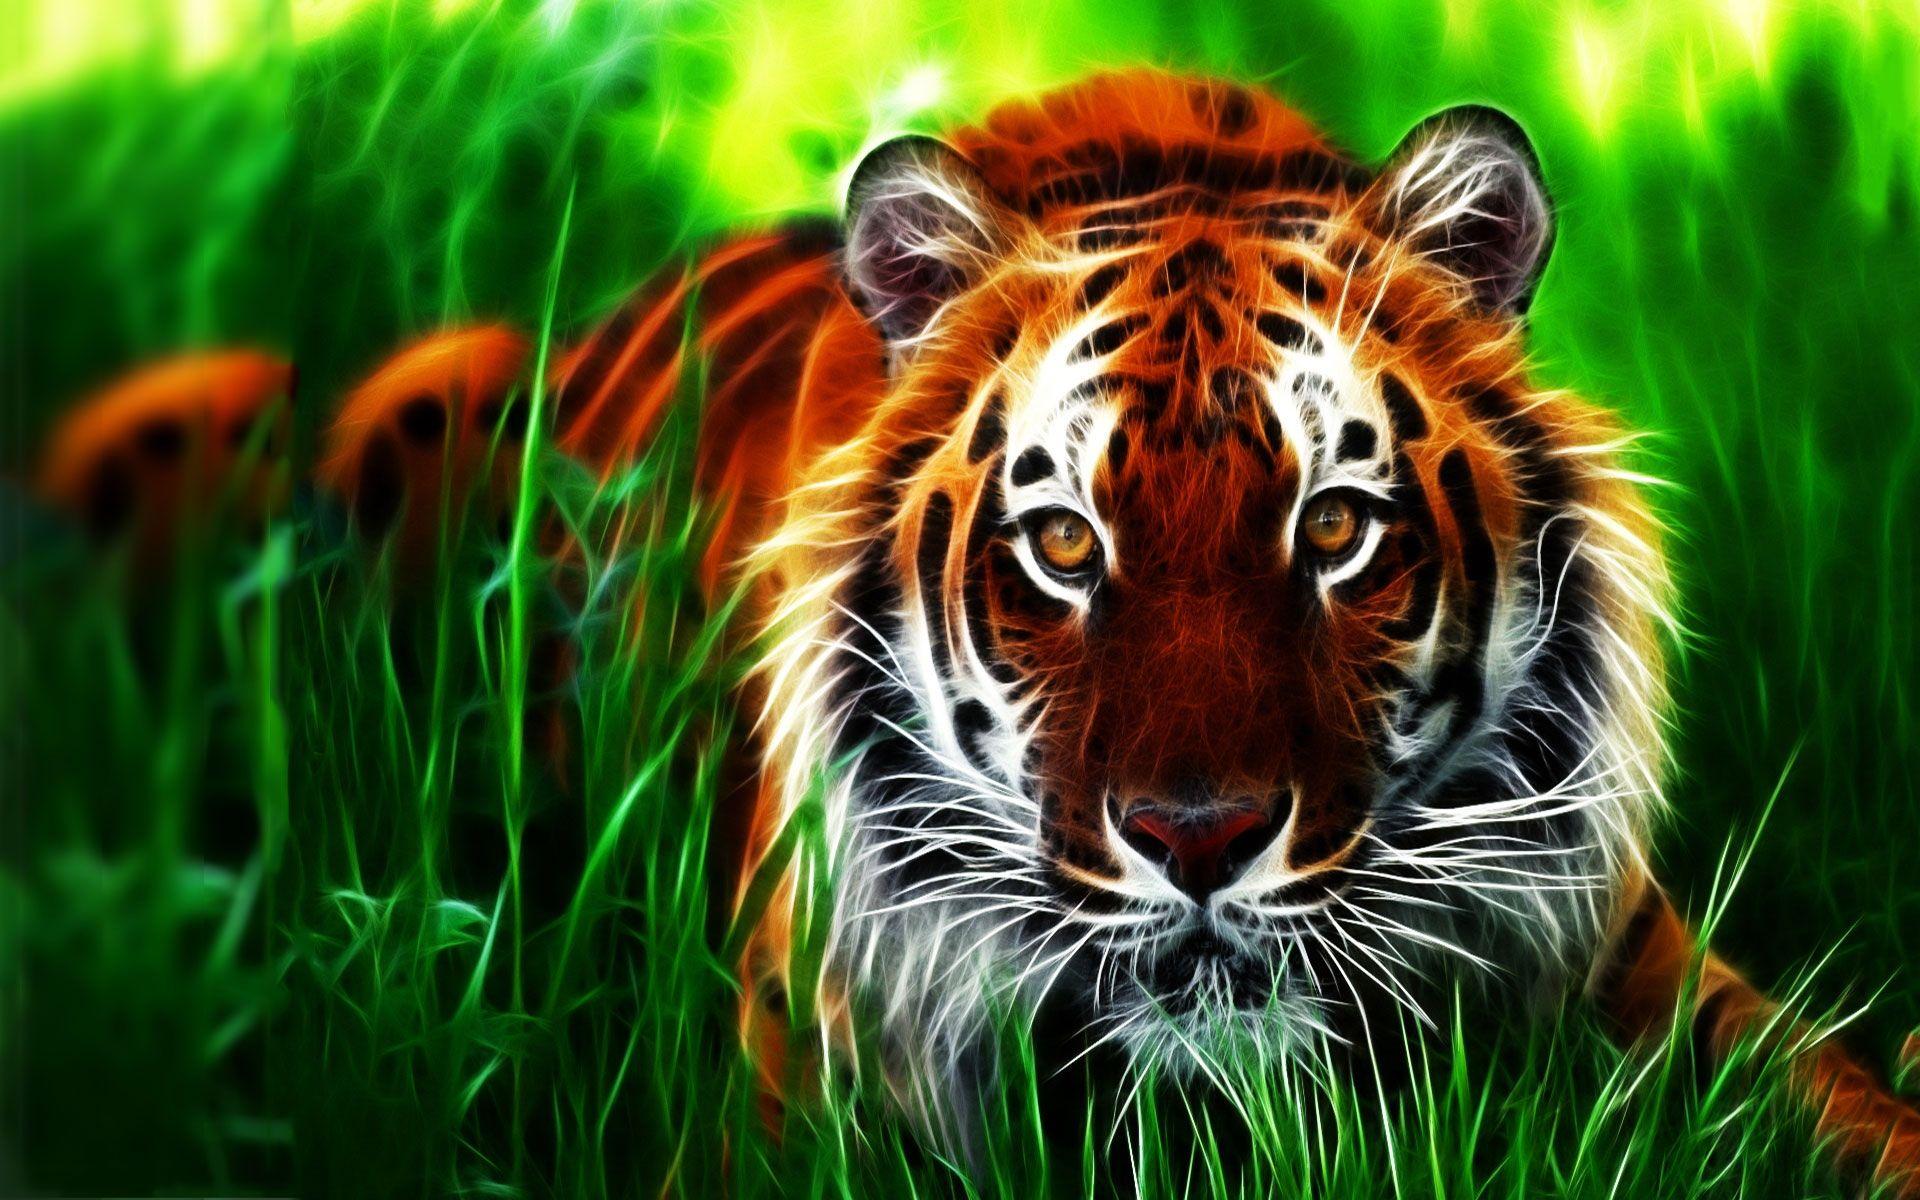 Best 3D Animal Wallpaper. HD Animated Animal Wallpaper